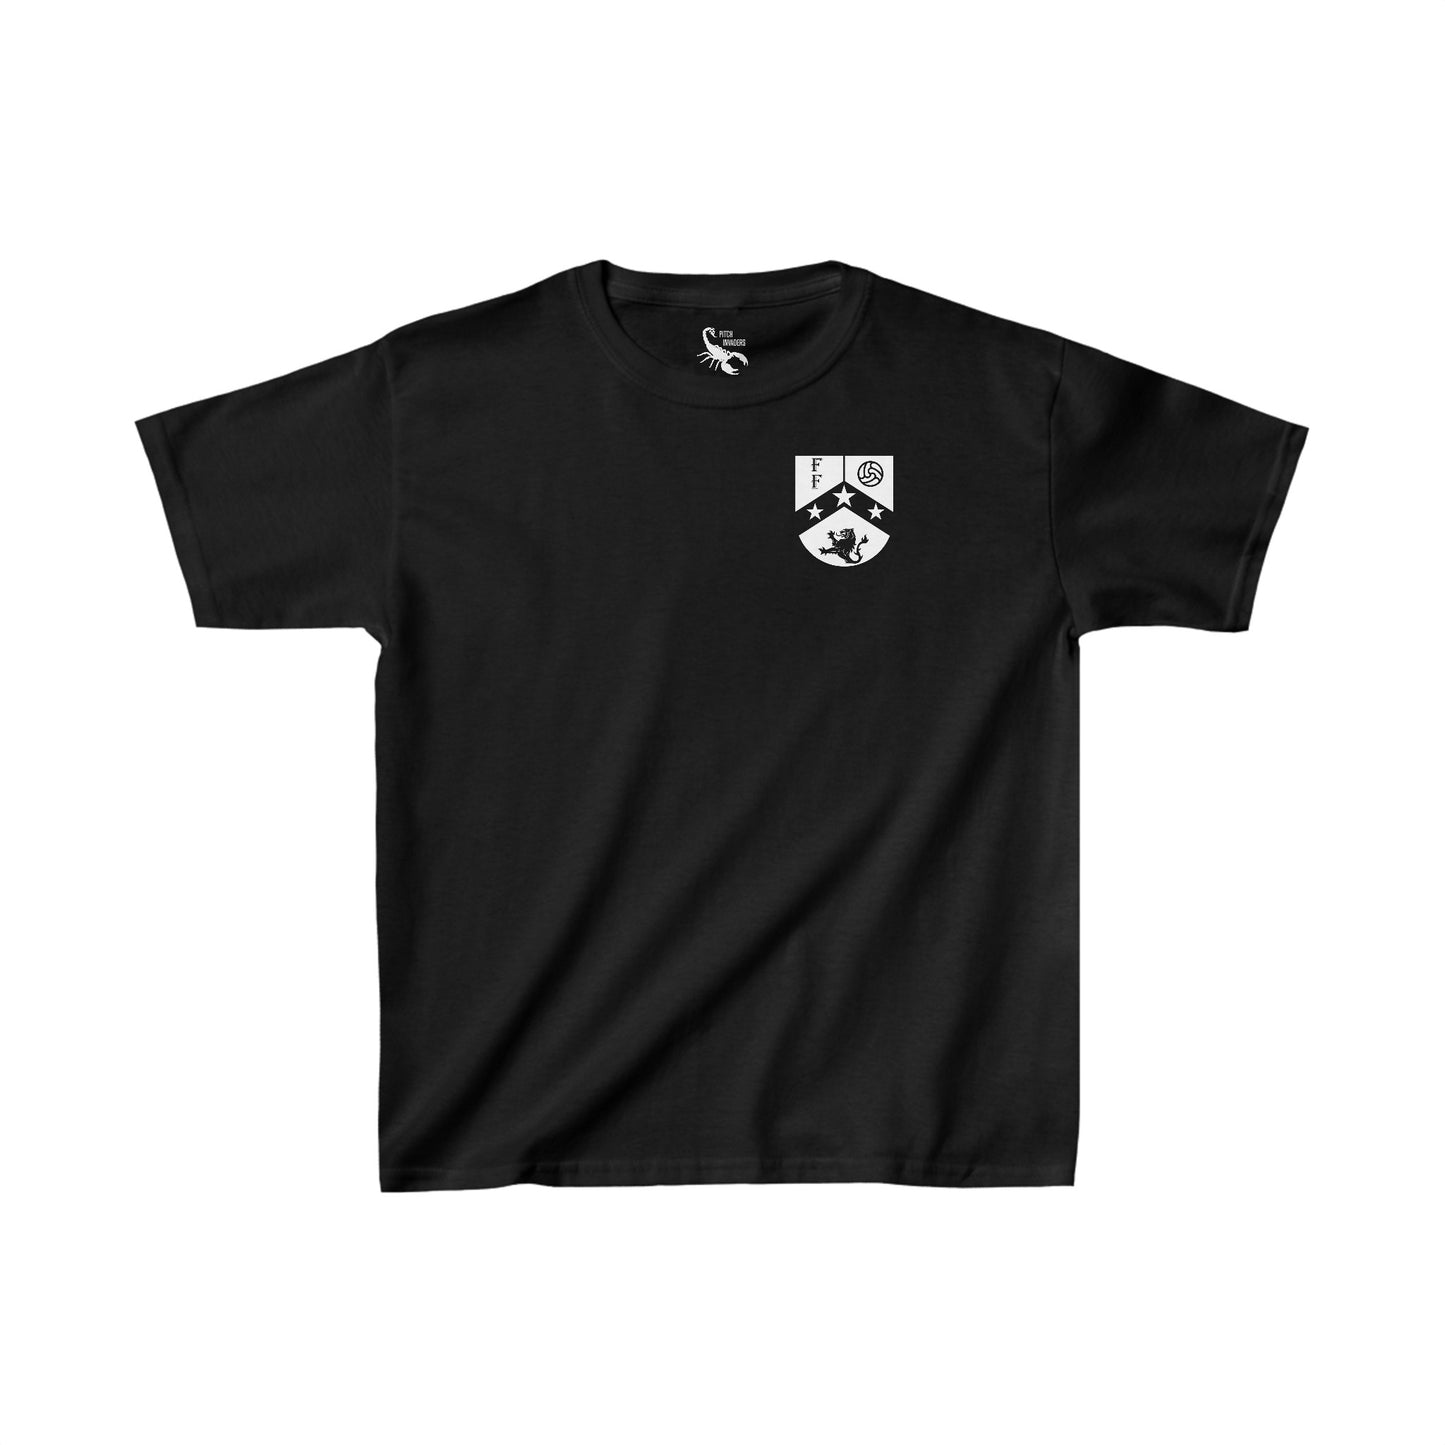 FEAR FIERCE LIONS Casual Youth T-Shirt (Unisex)